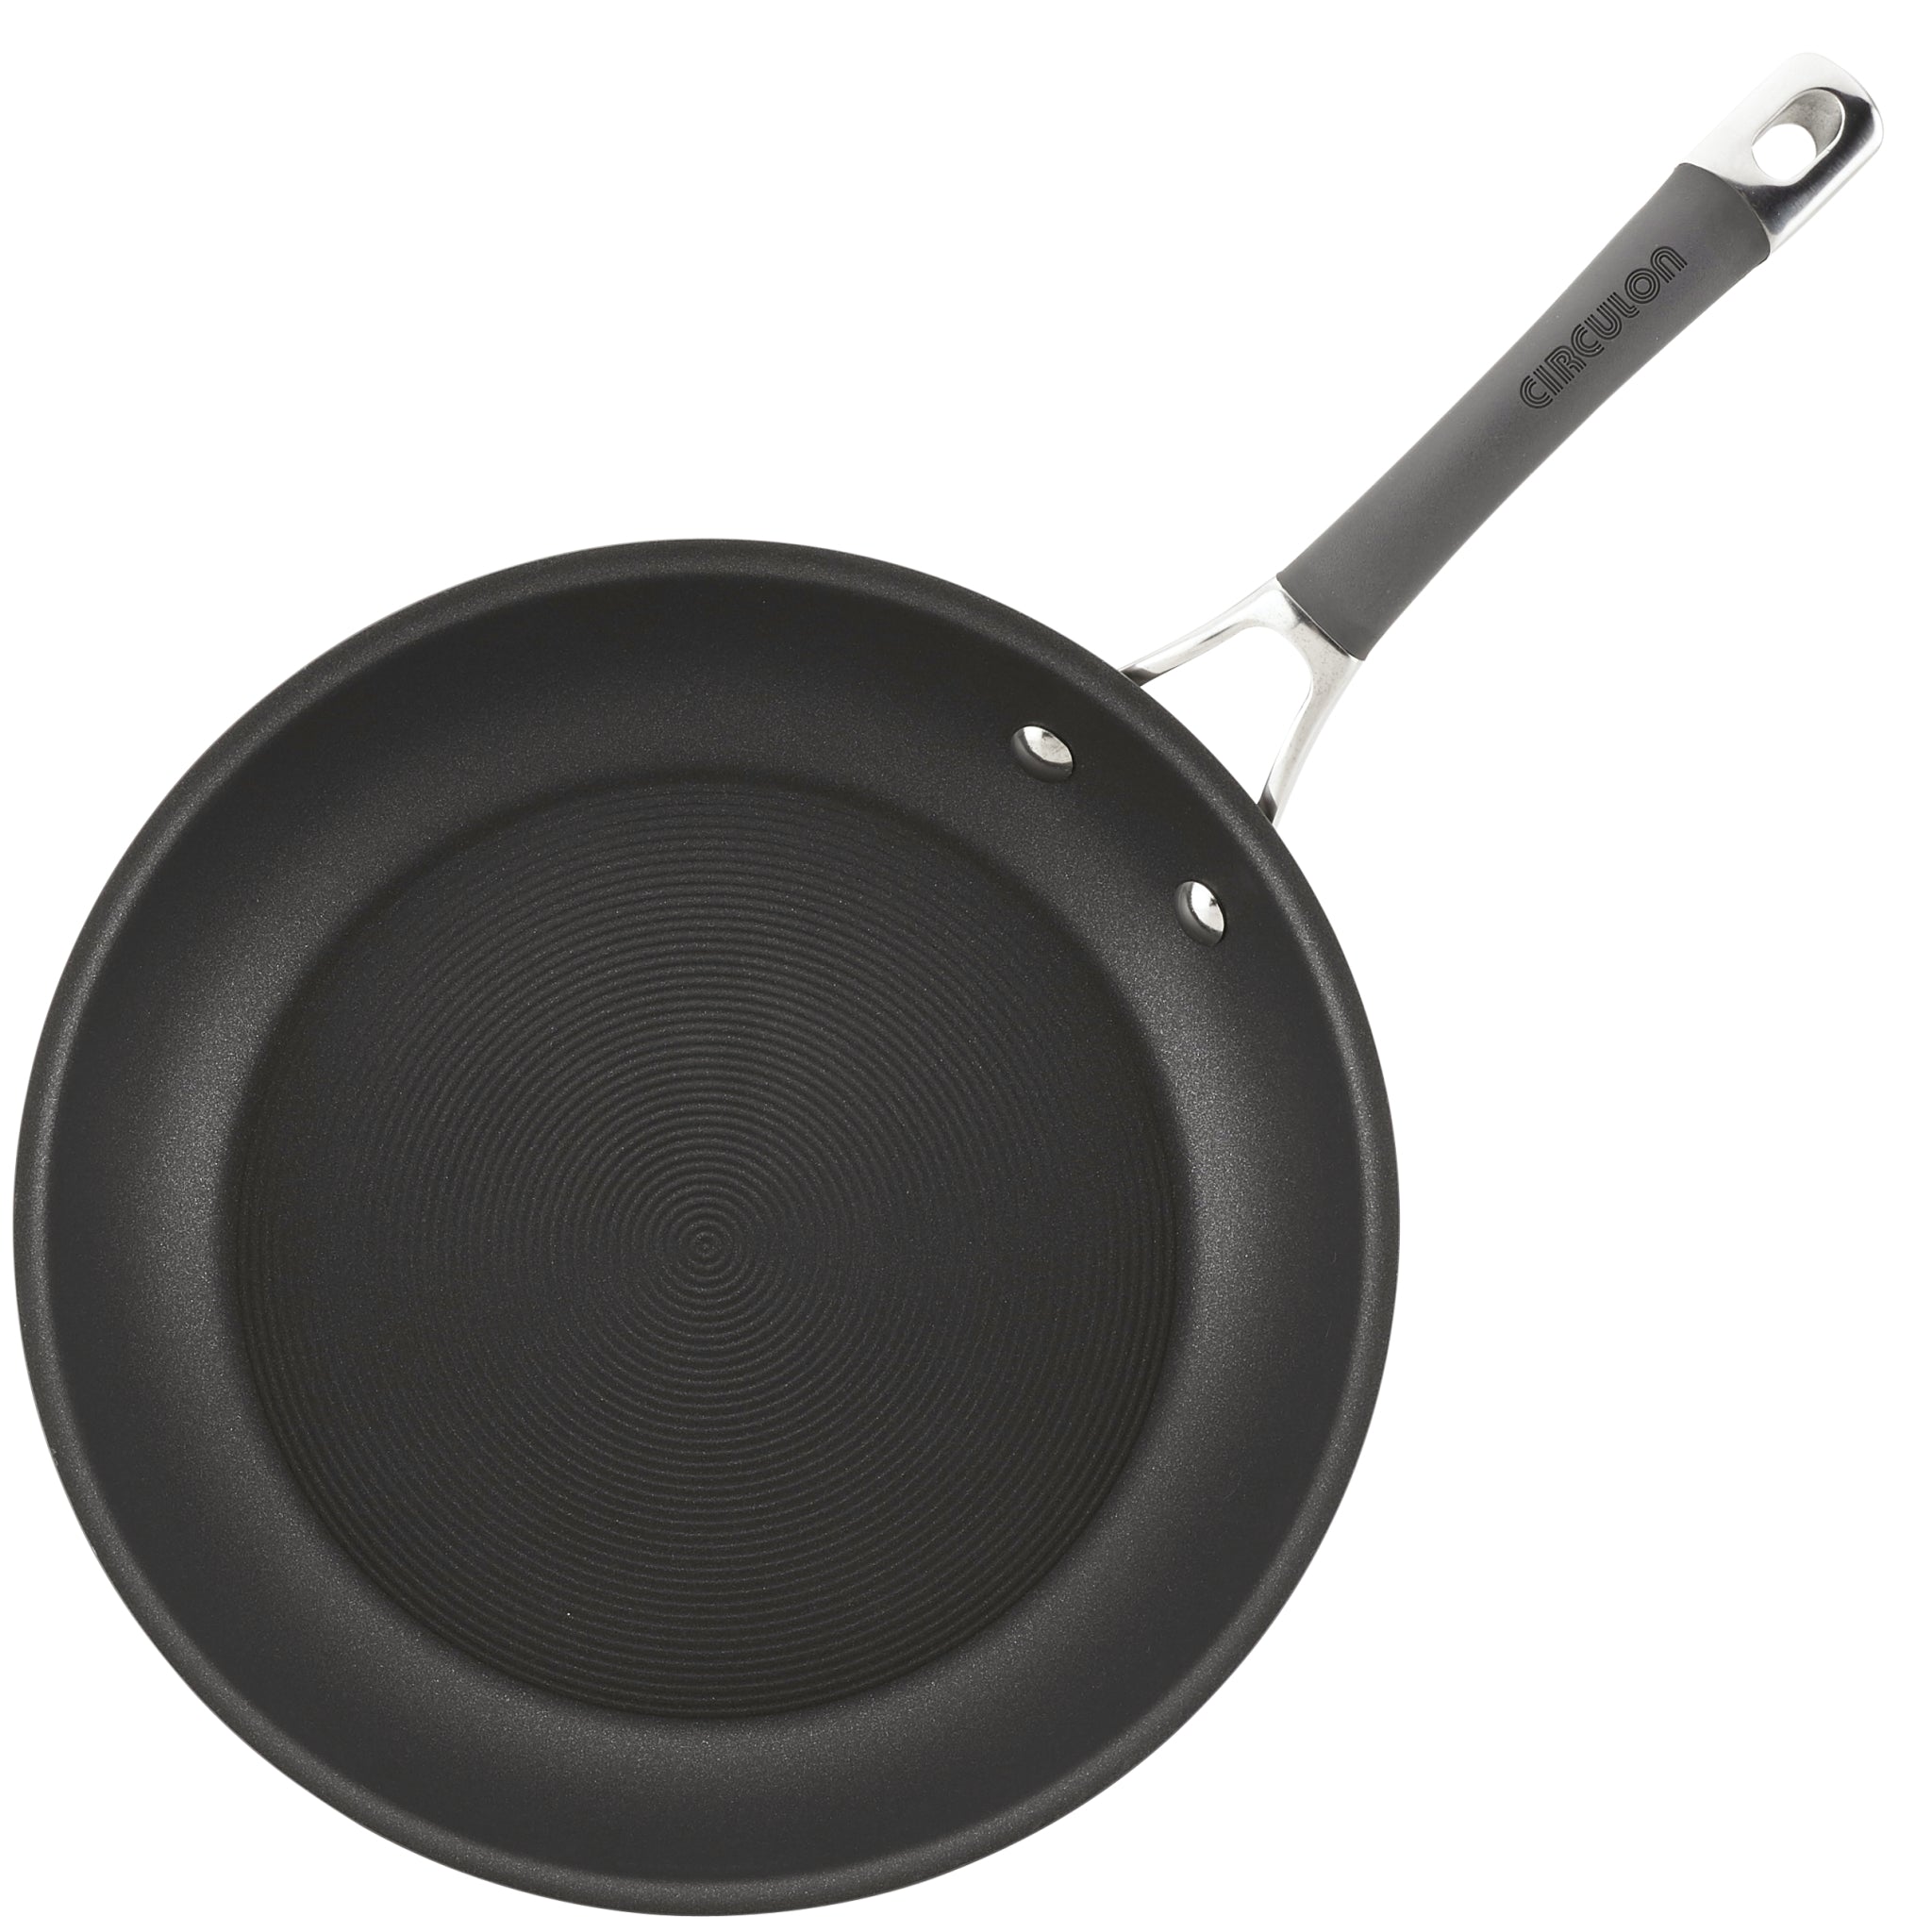 2-Piece Nonstick Frying Pan Set